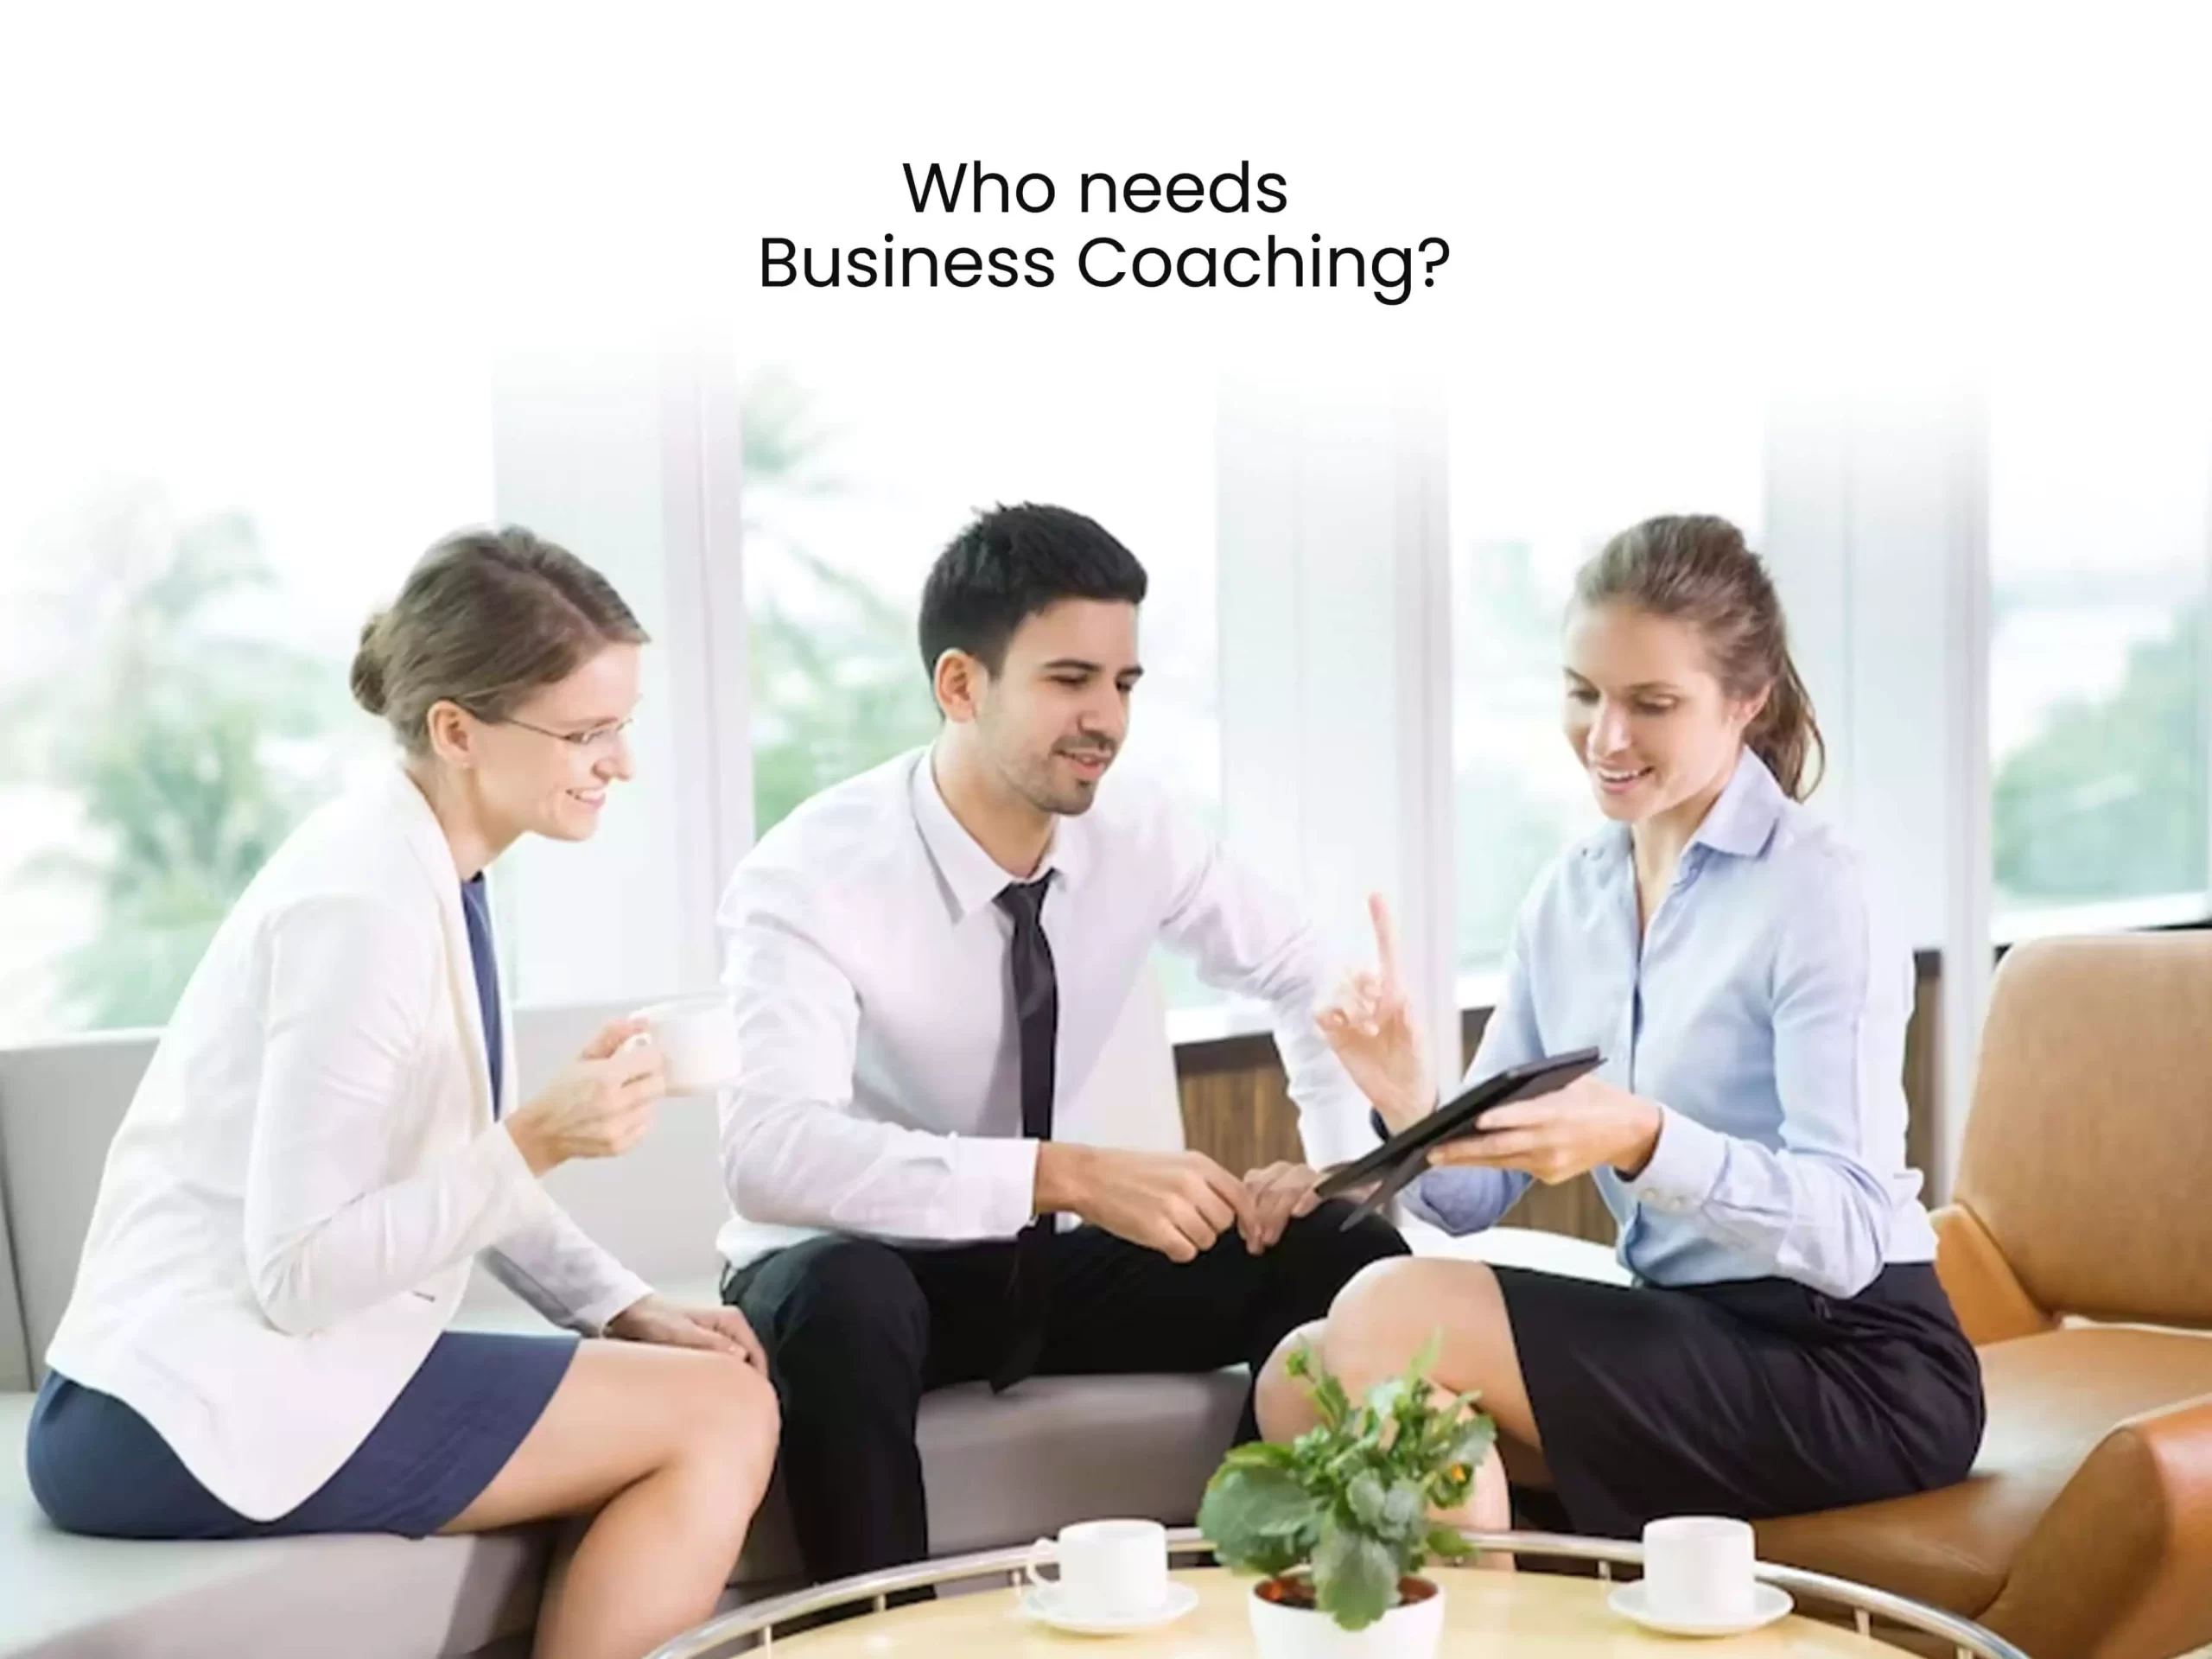 Who needs business coaching?